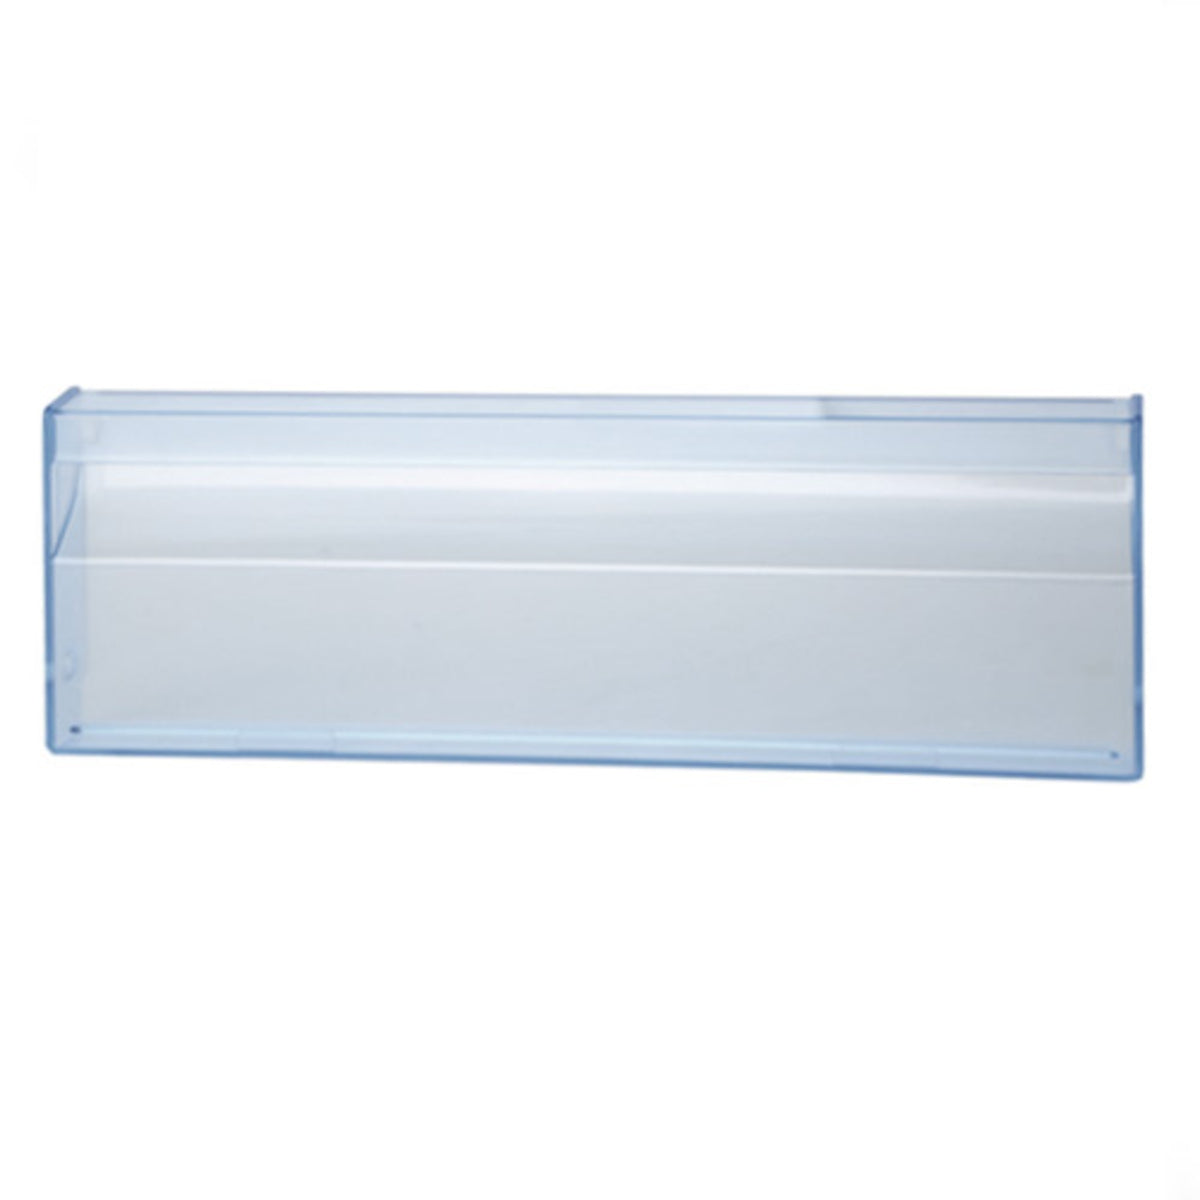 Repuesto tapa cajón congelador frigorífico Balay, Blaupunkt, Pitsos 11010113